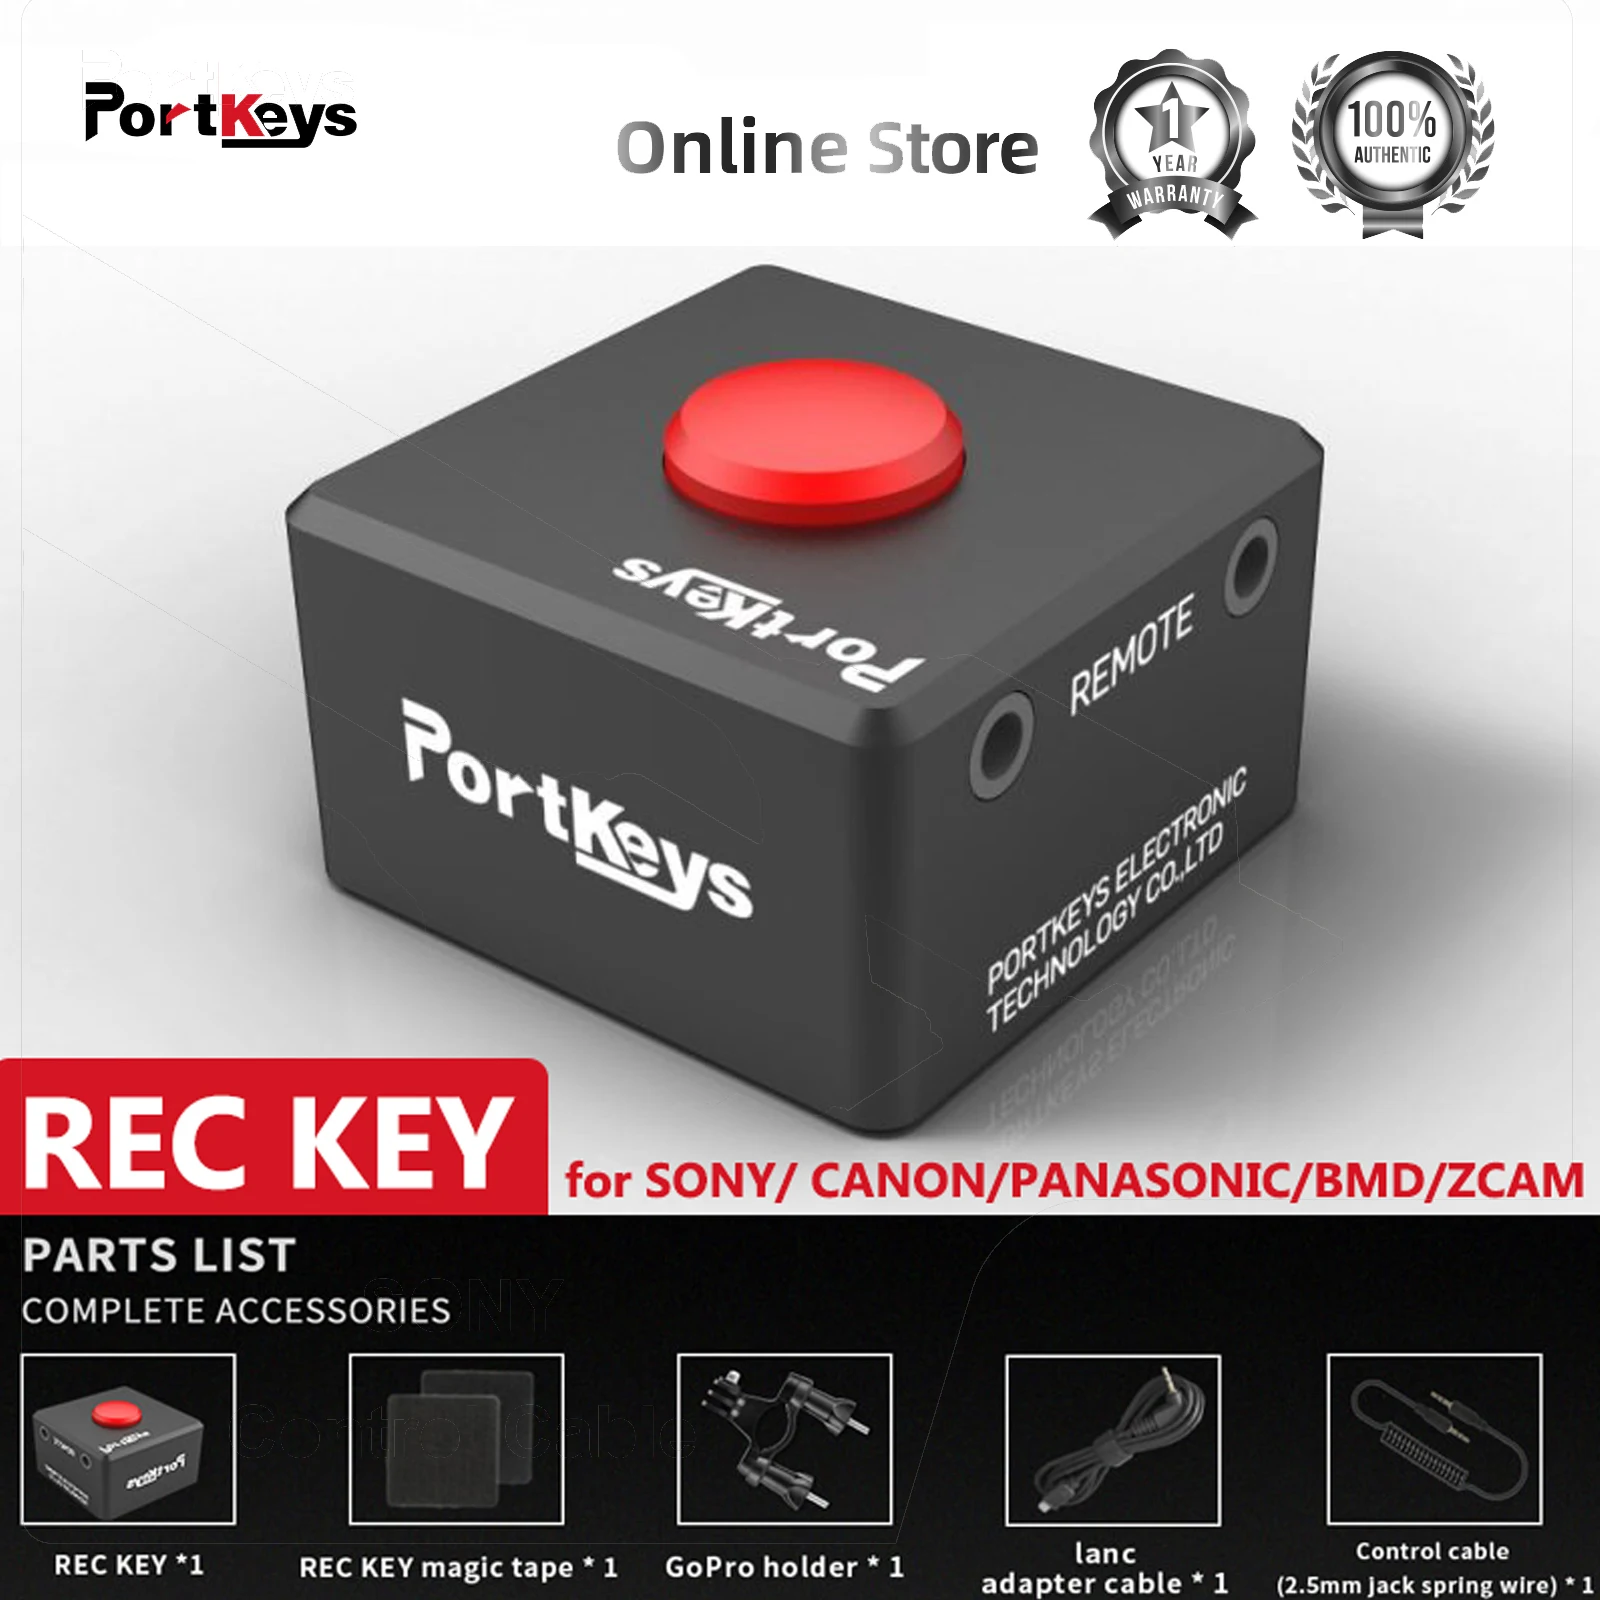 

Portkeys LANC REC KEY for Portkeys Portable Monitor BM5III BM5III WR LH5P II Cameras SONY/ CANON/PANASONIC/BMD/ZCAM